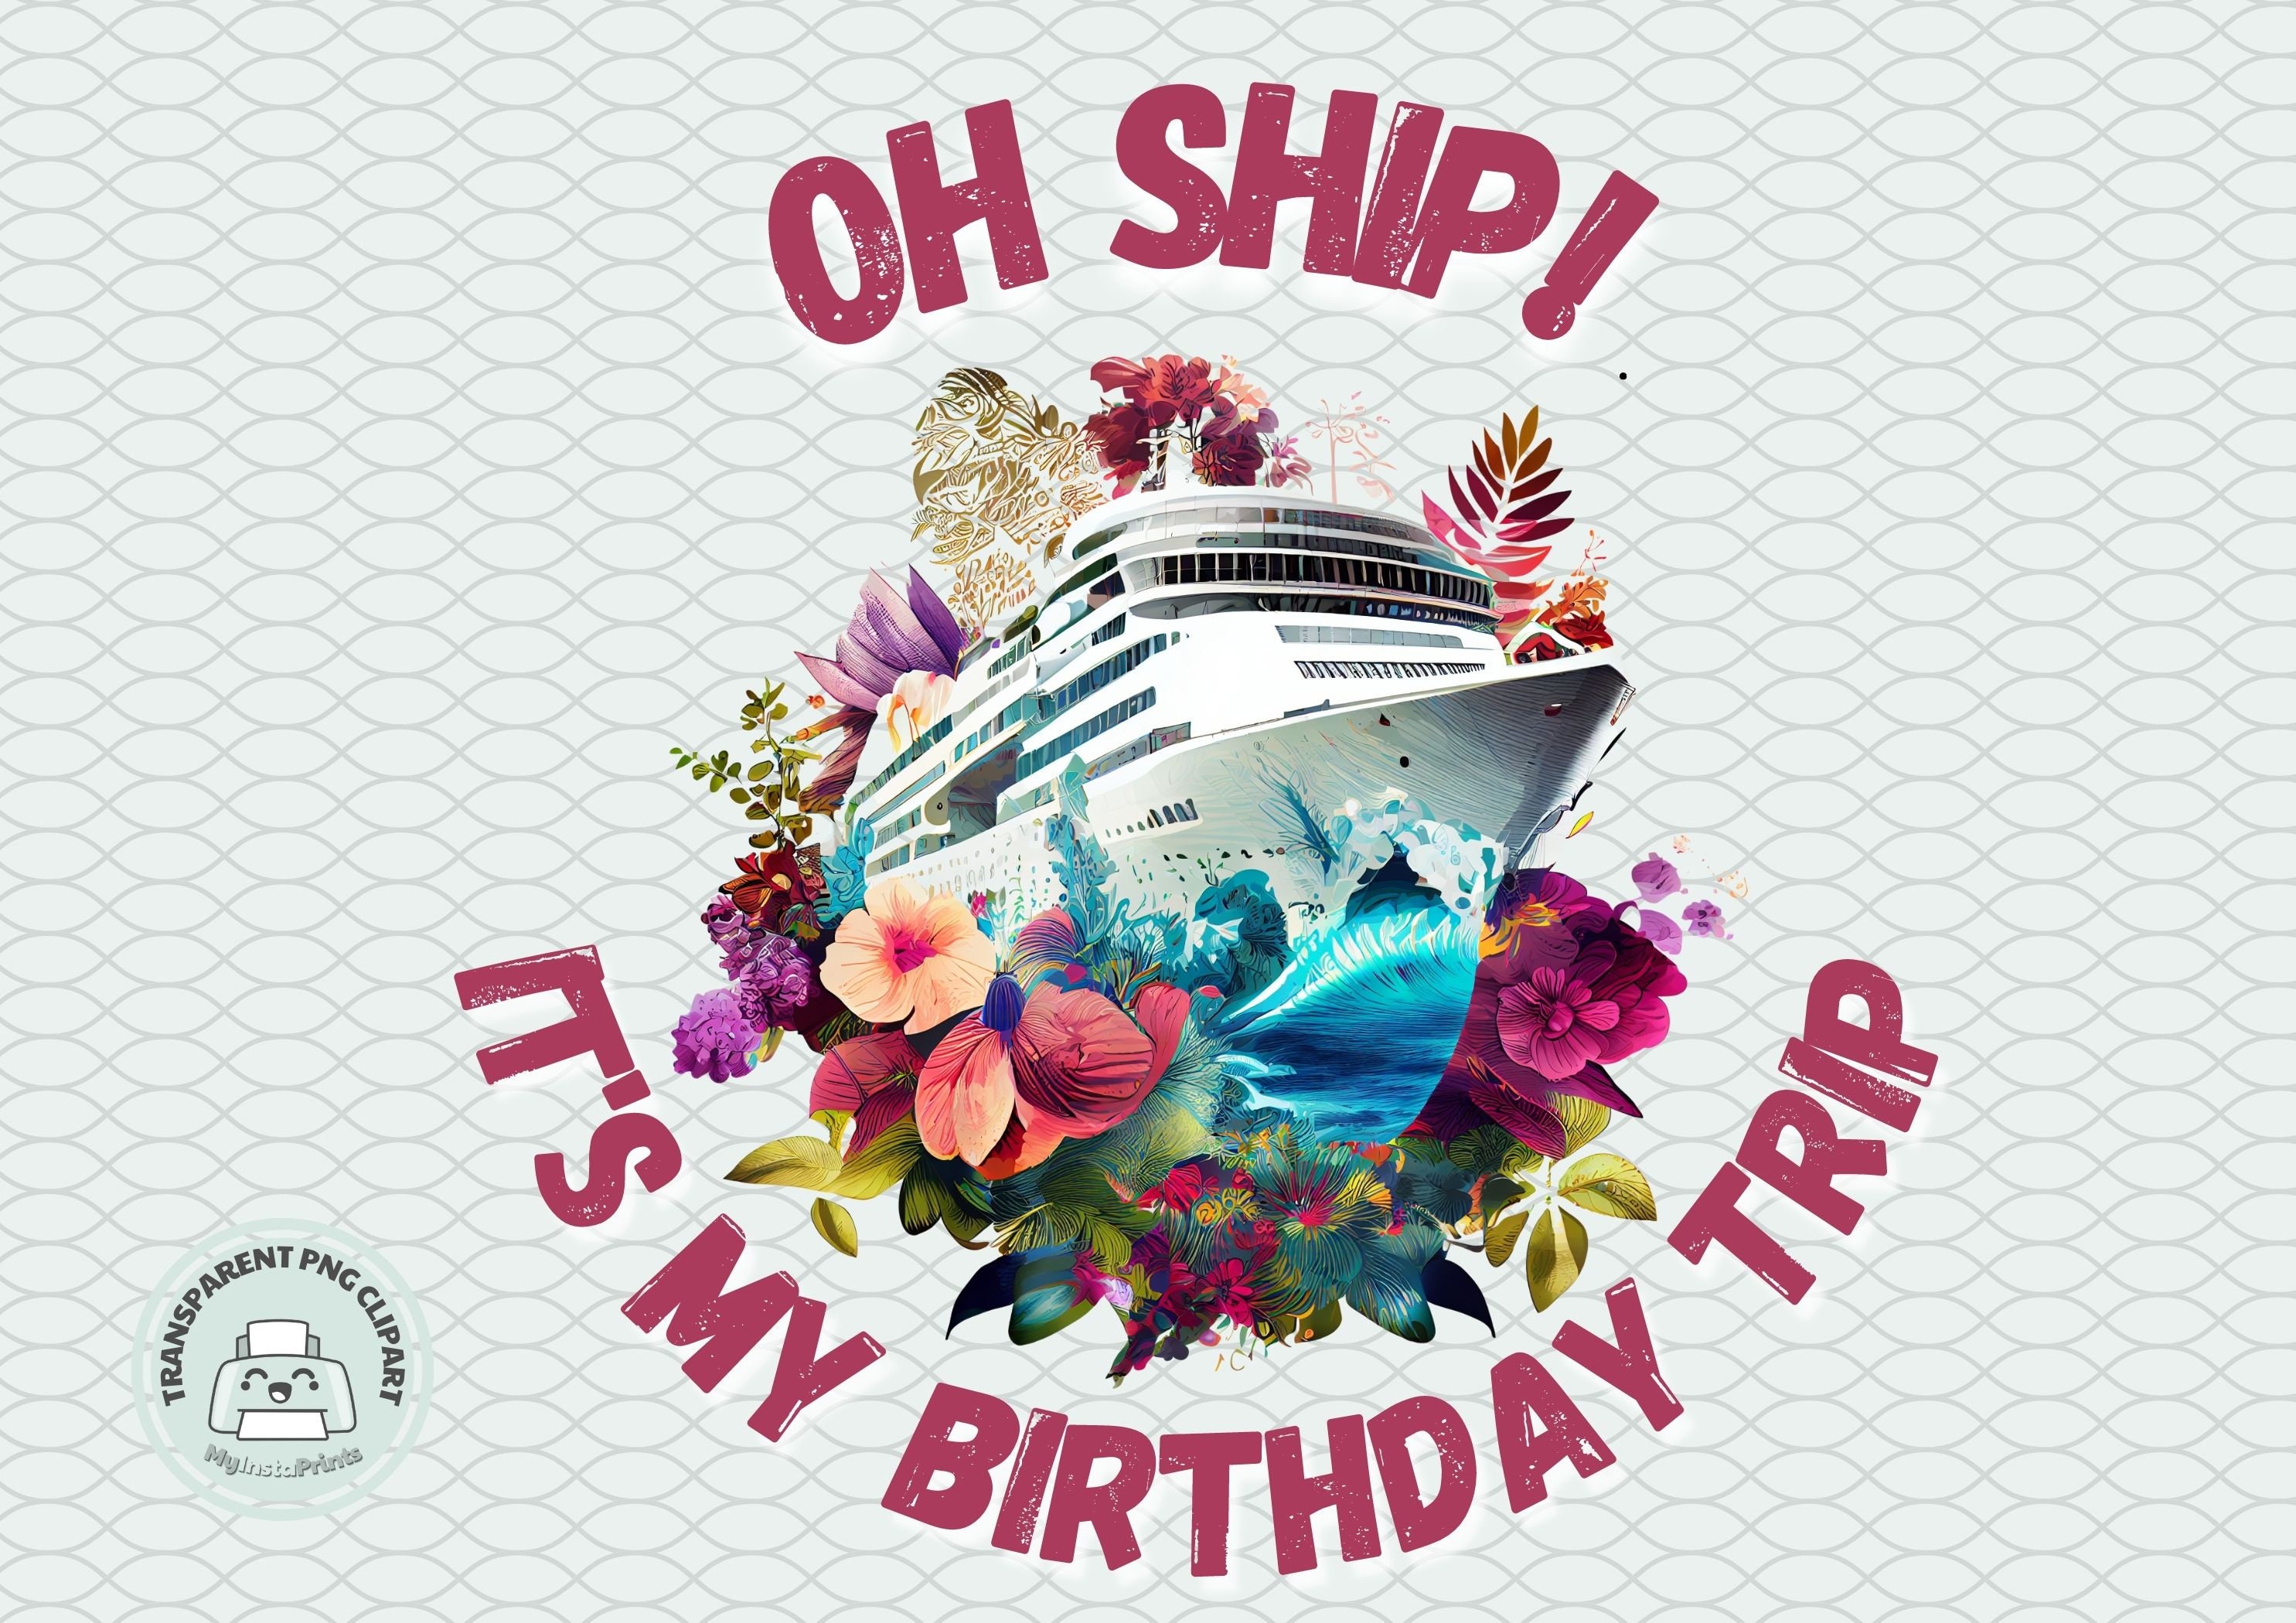 cruise birthday images